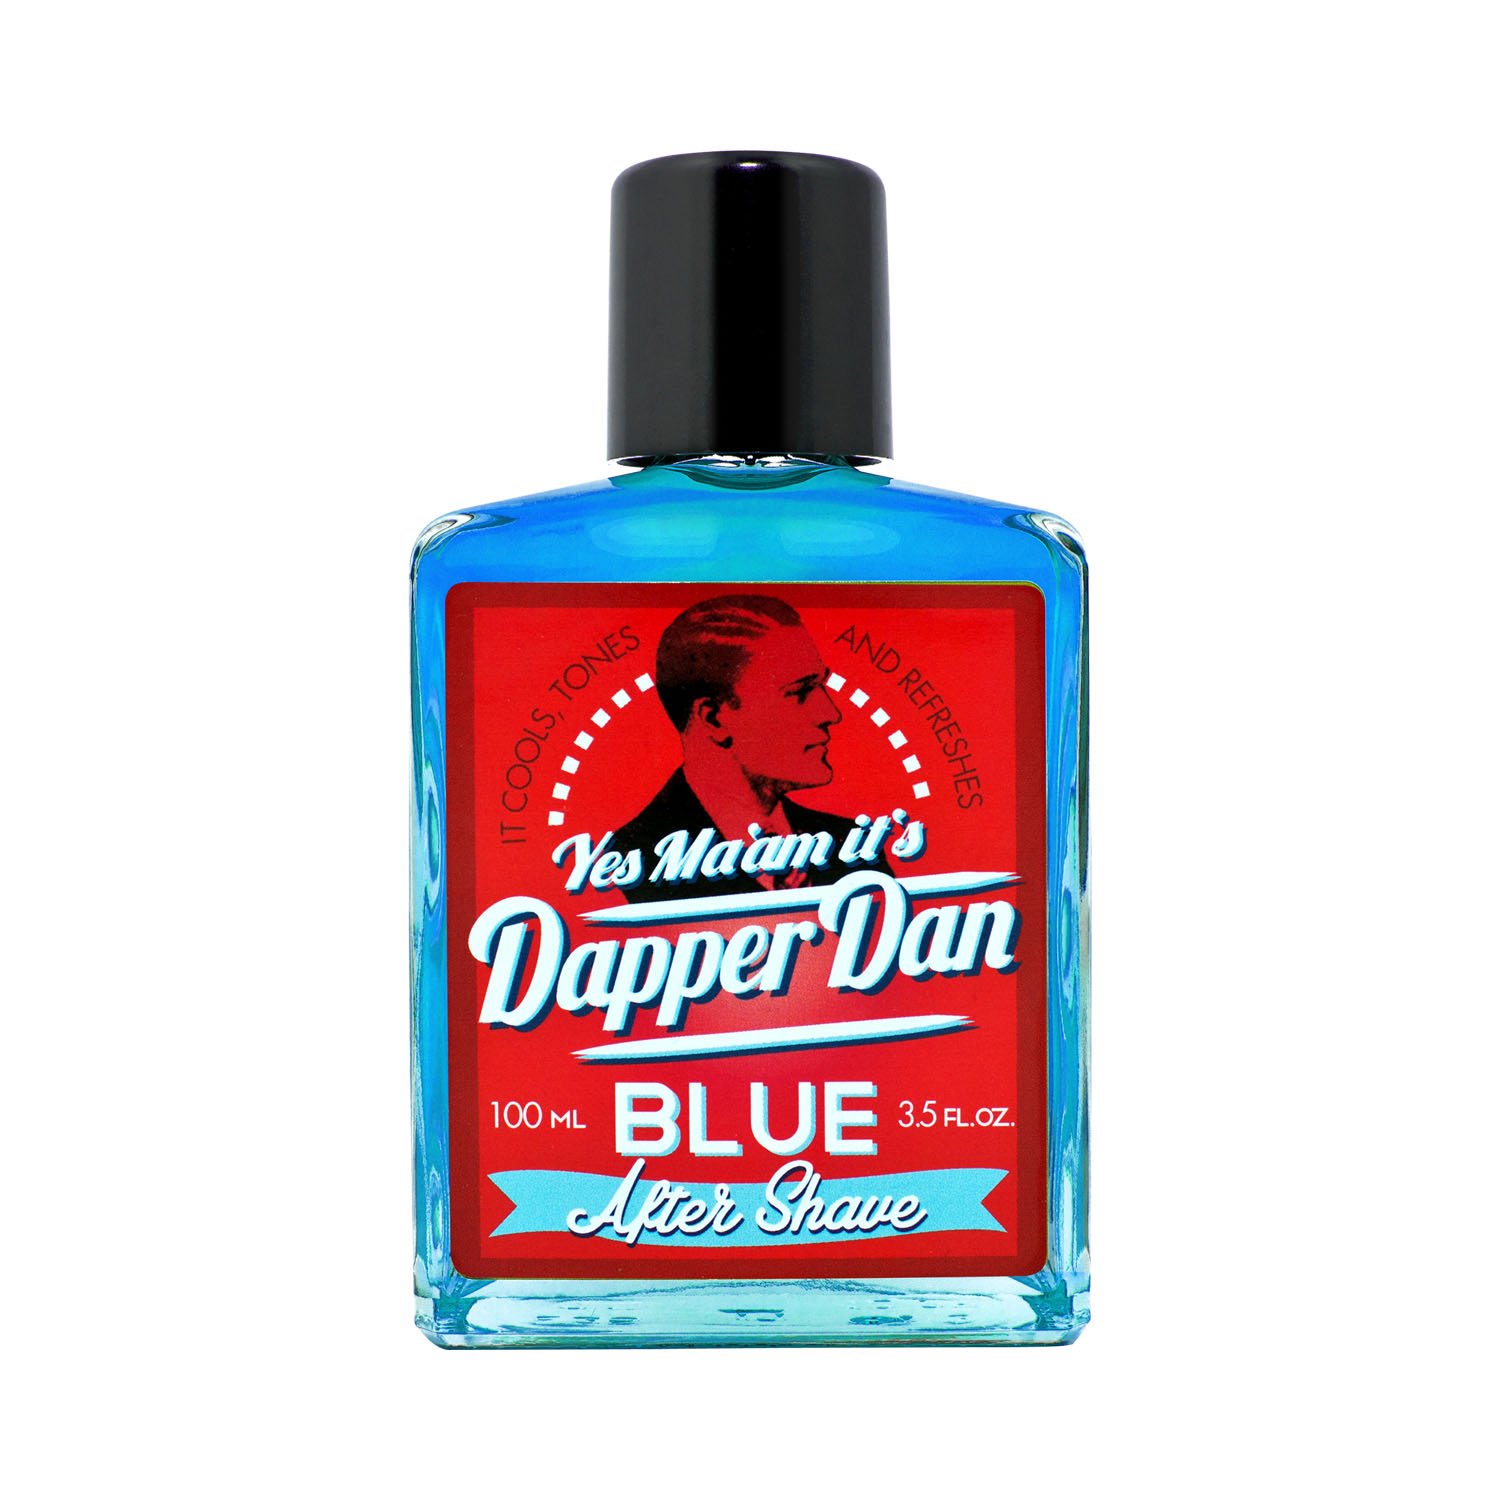 Dapper Dan - After Shave Blue